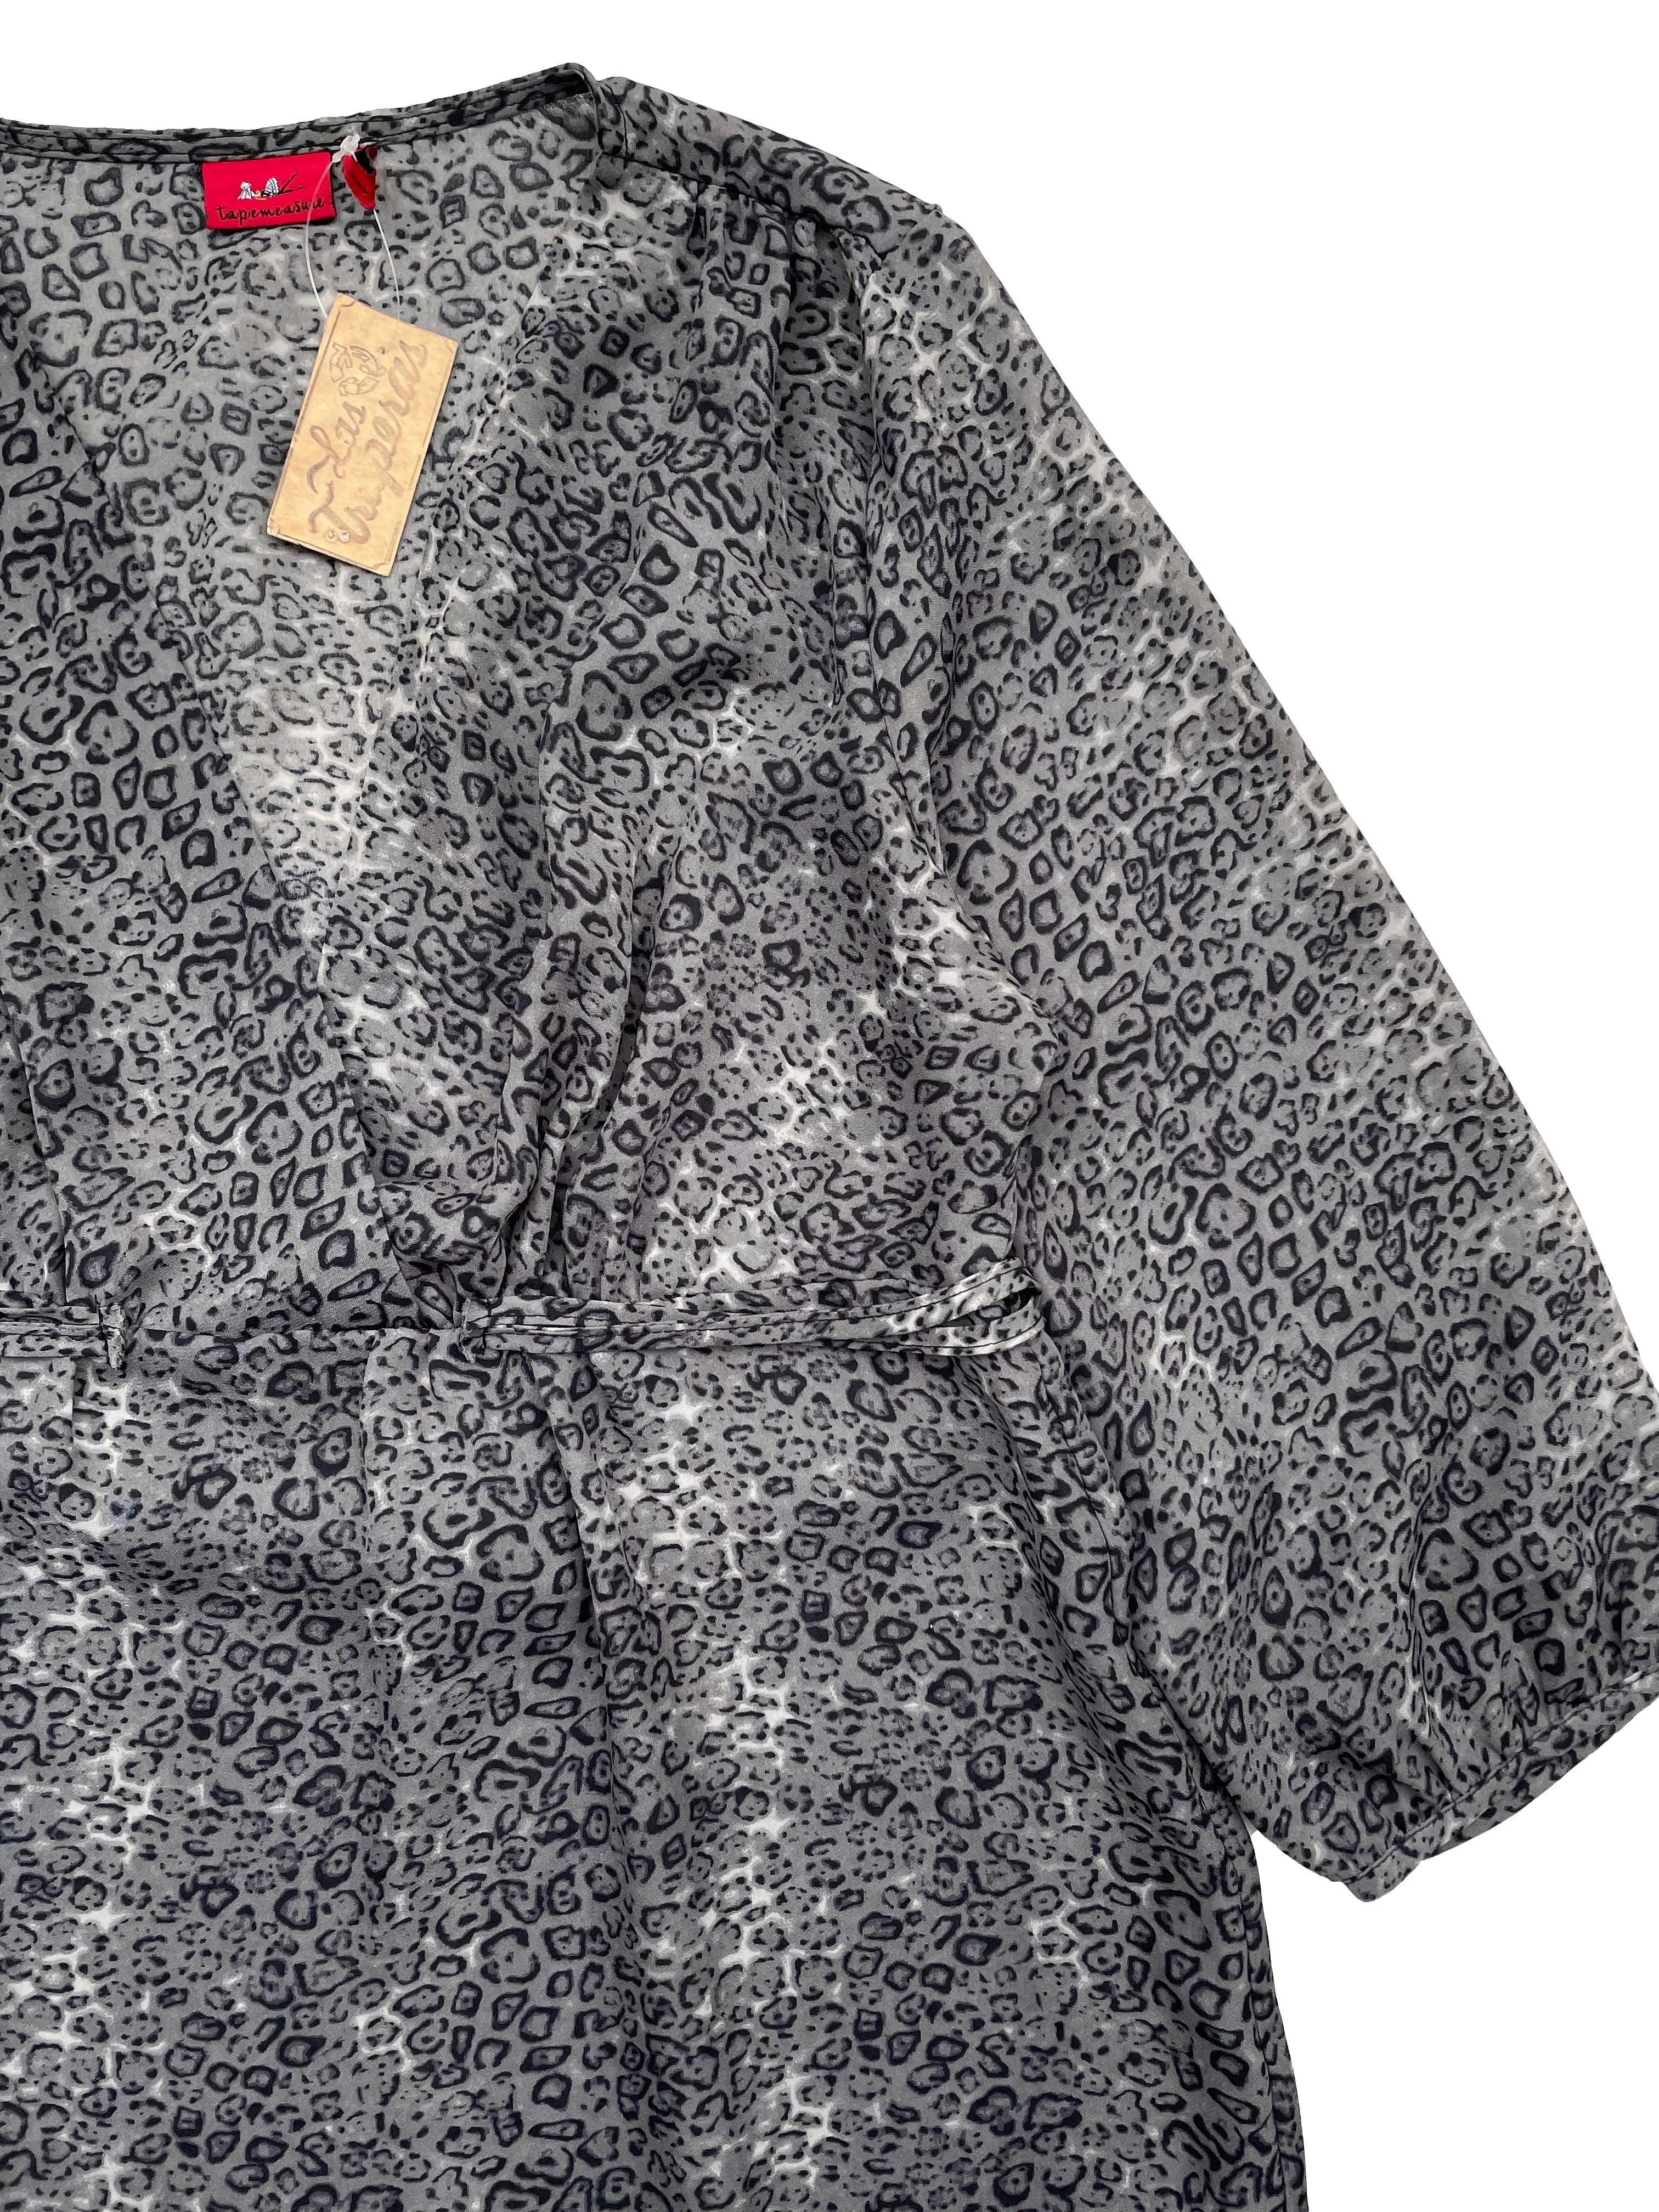 Blusa Tapemeasure de gasa gruesa animal print en tonos grises, escote cruzado, tiritas lara regular, manga 3/4. Busto 112cm Largo 67cm